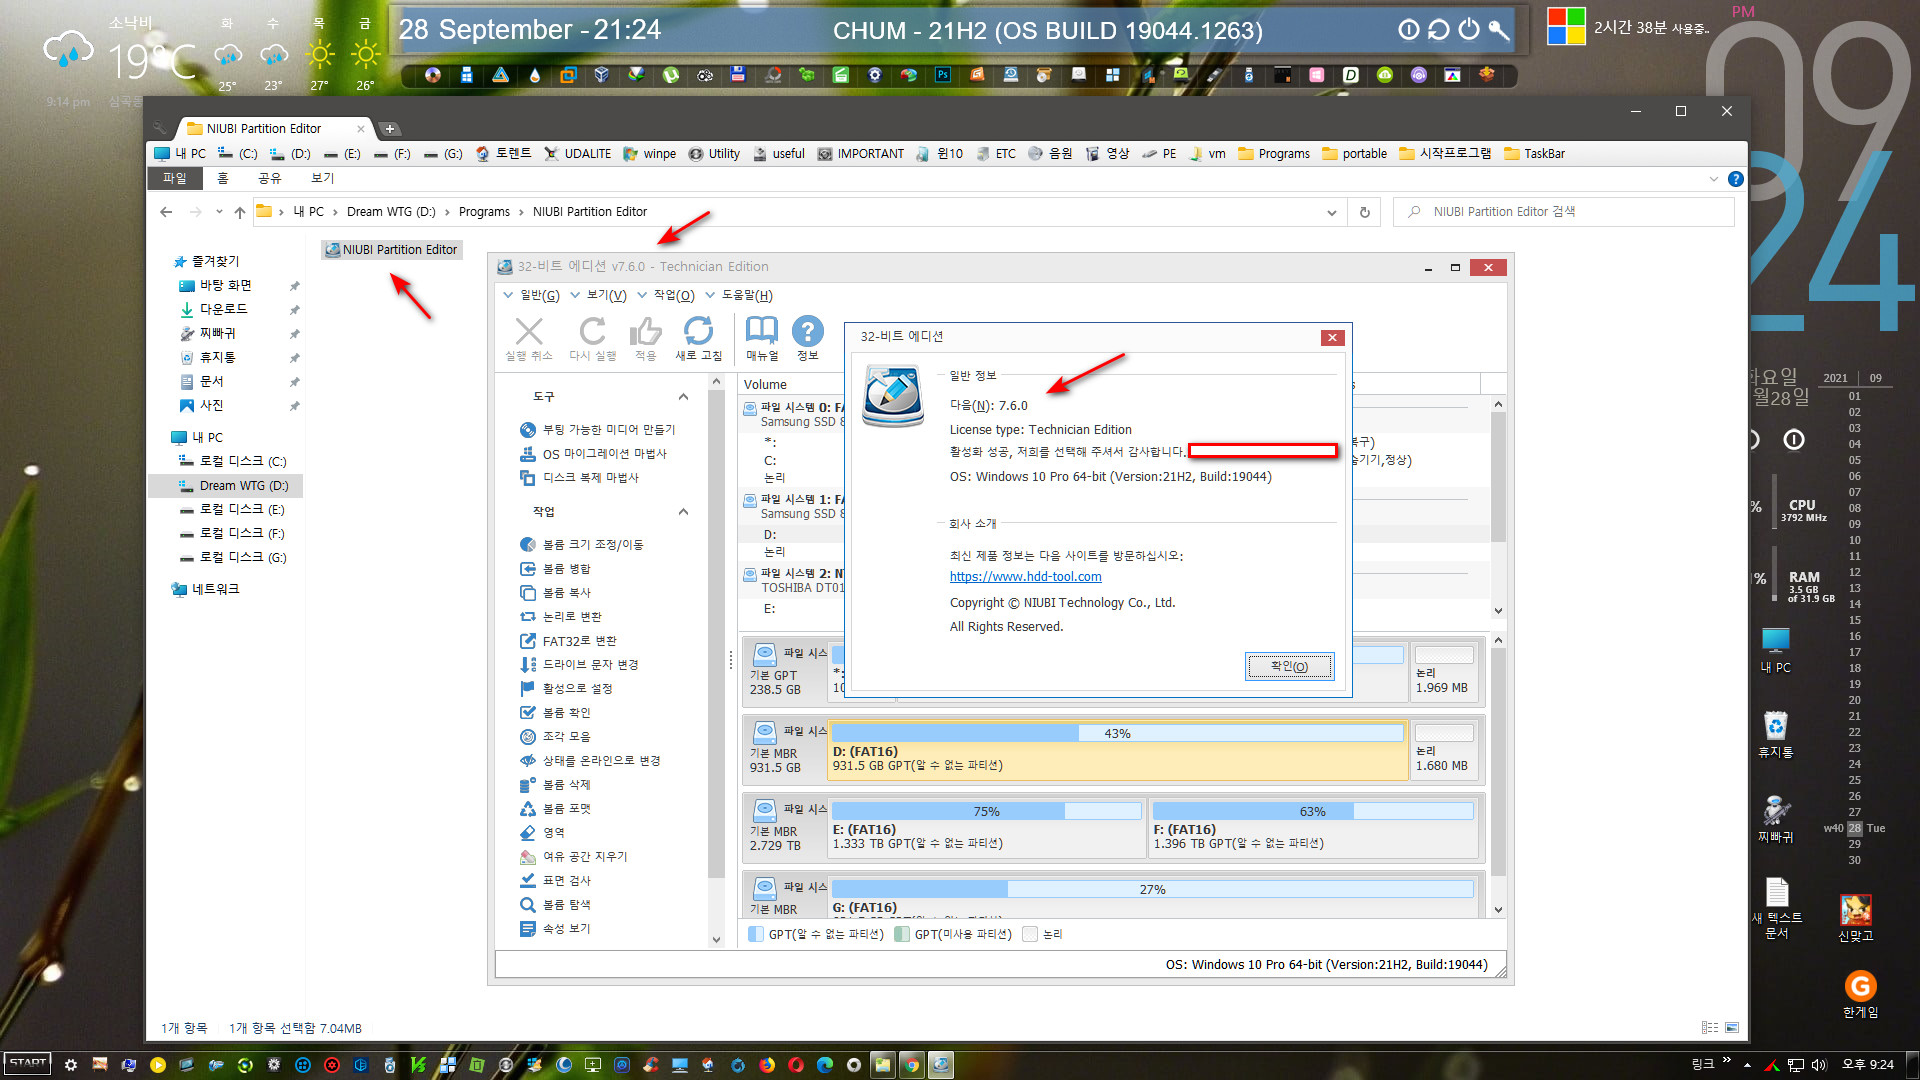 NIUBI Partition Editor Pro / Technician 9.7.3 for windows instal free